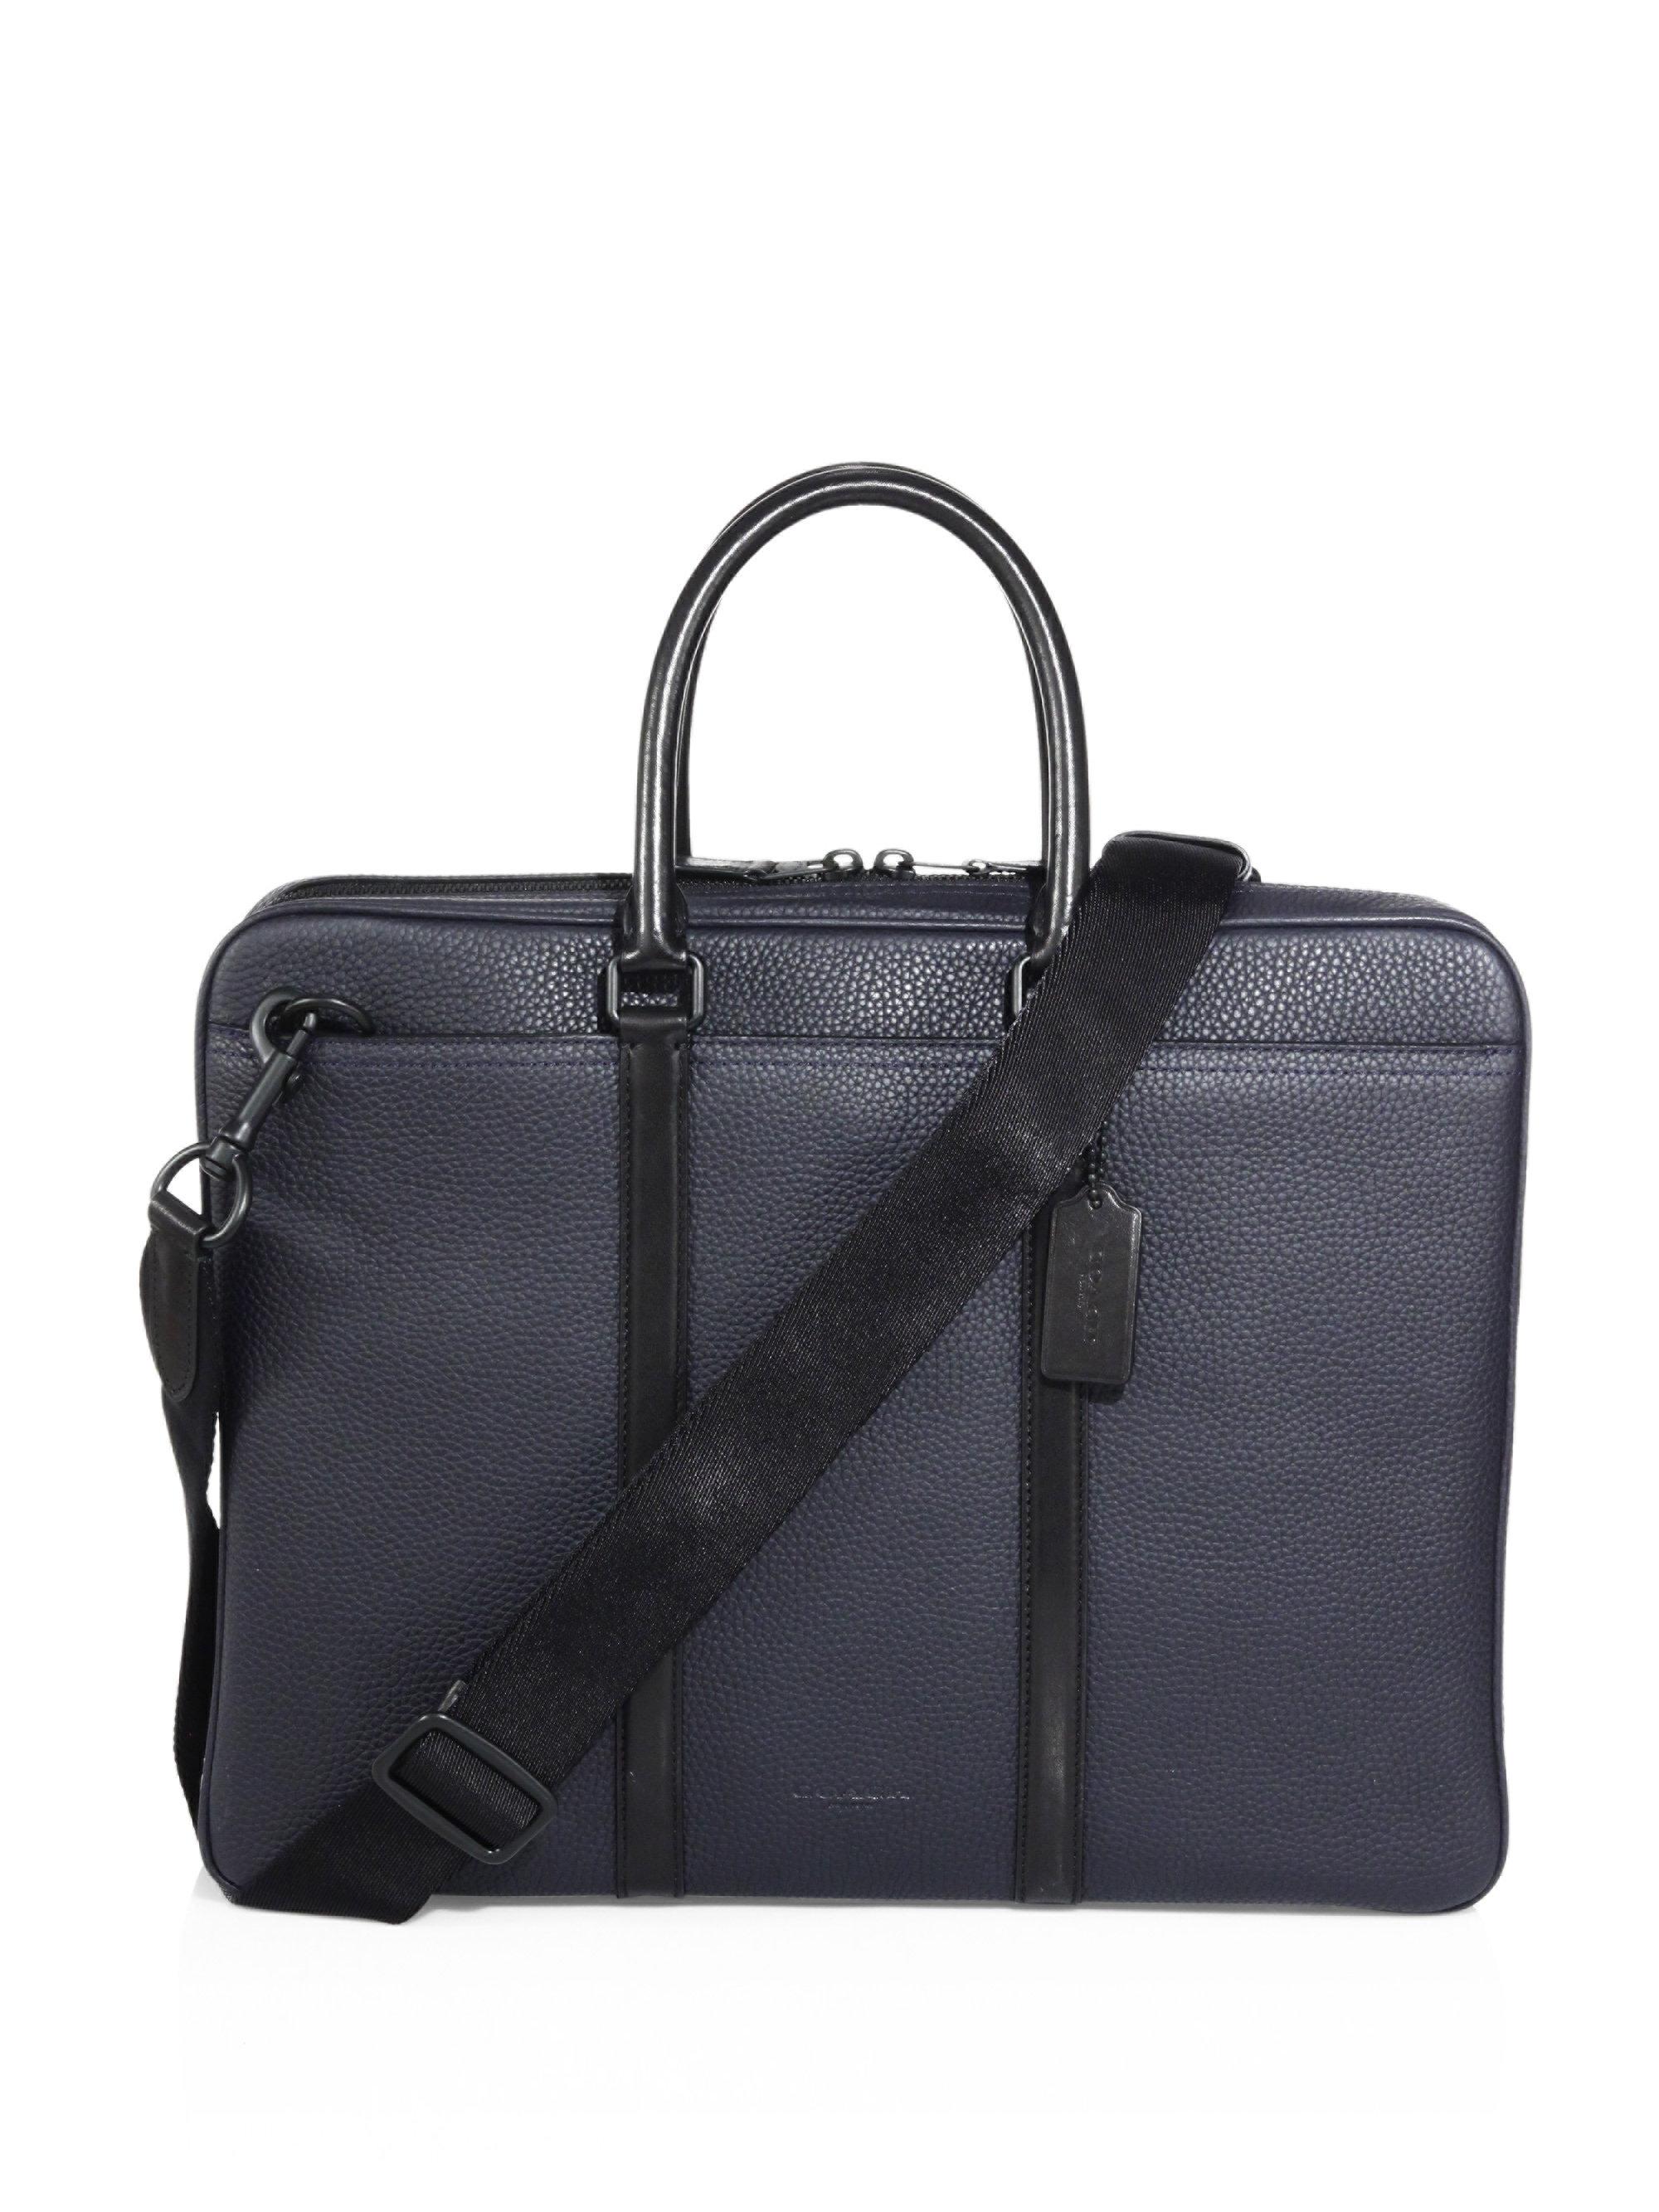 Lyst - Coach Metropolitan Pebbled Leather Briefcase in Black for Men